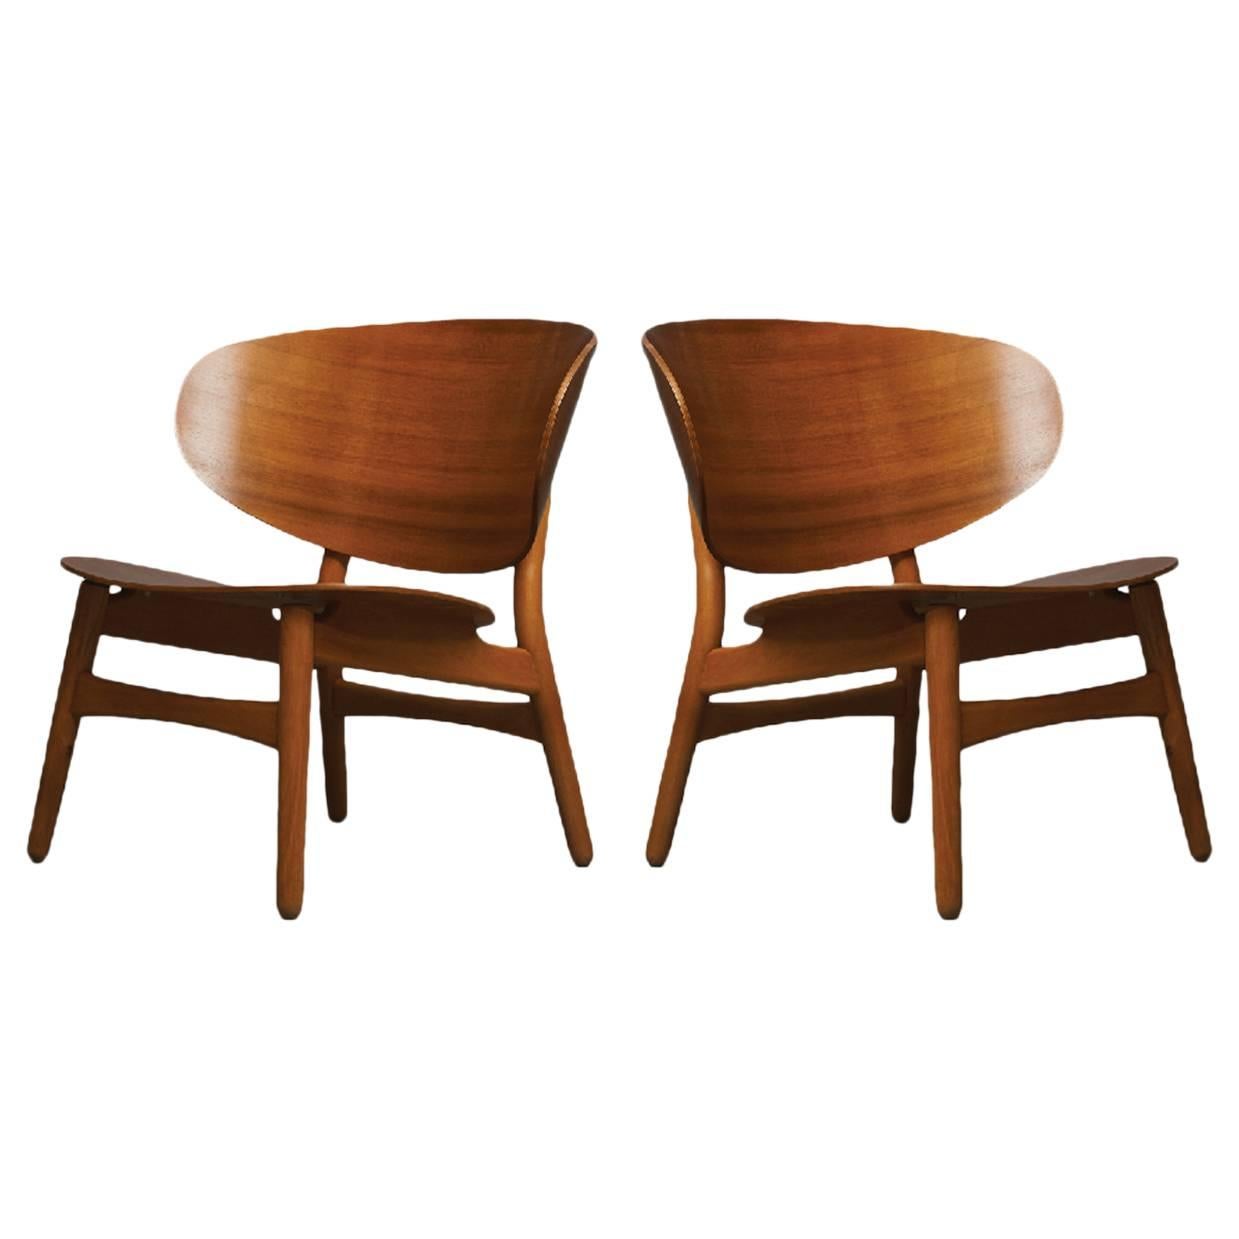 Hans Wegner, Pair of Shell Lounge Chairs